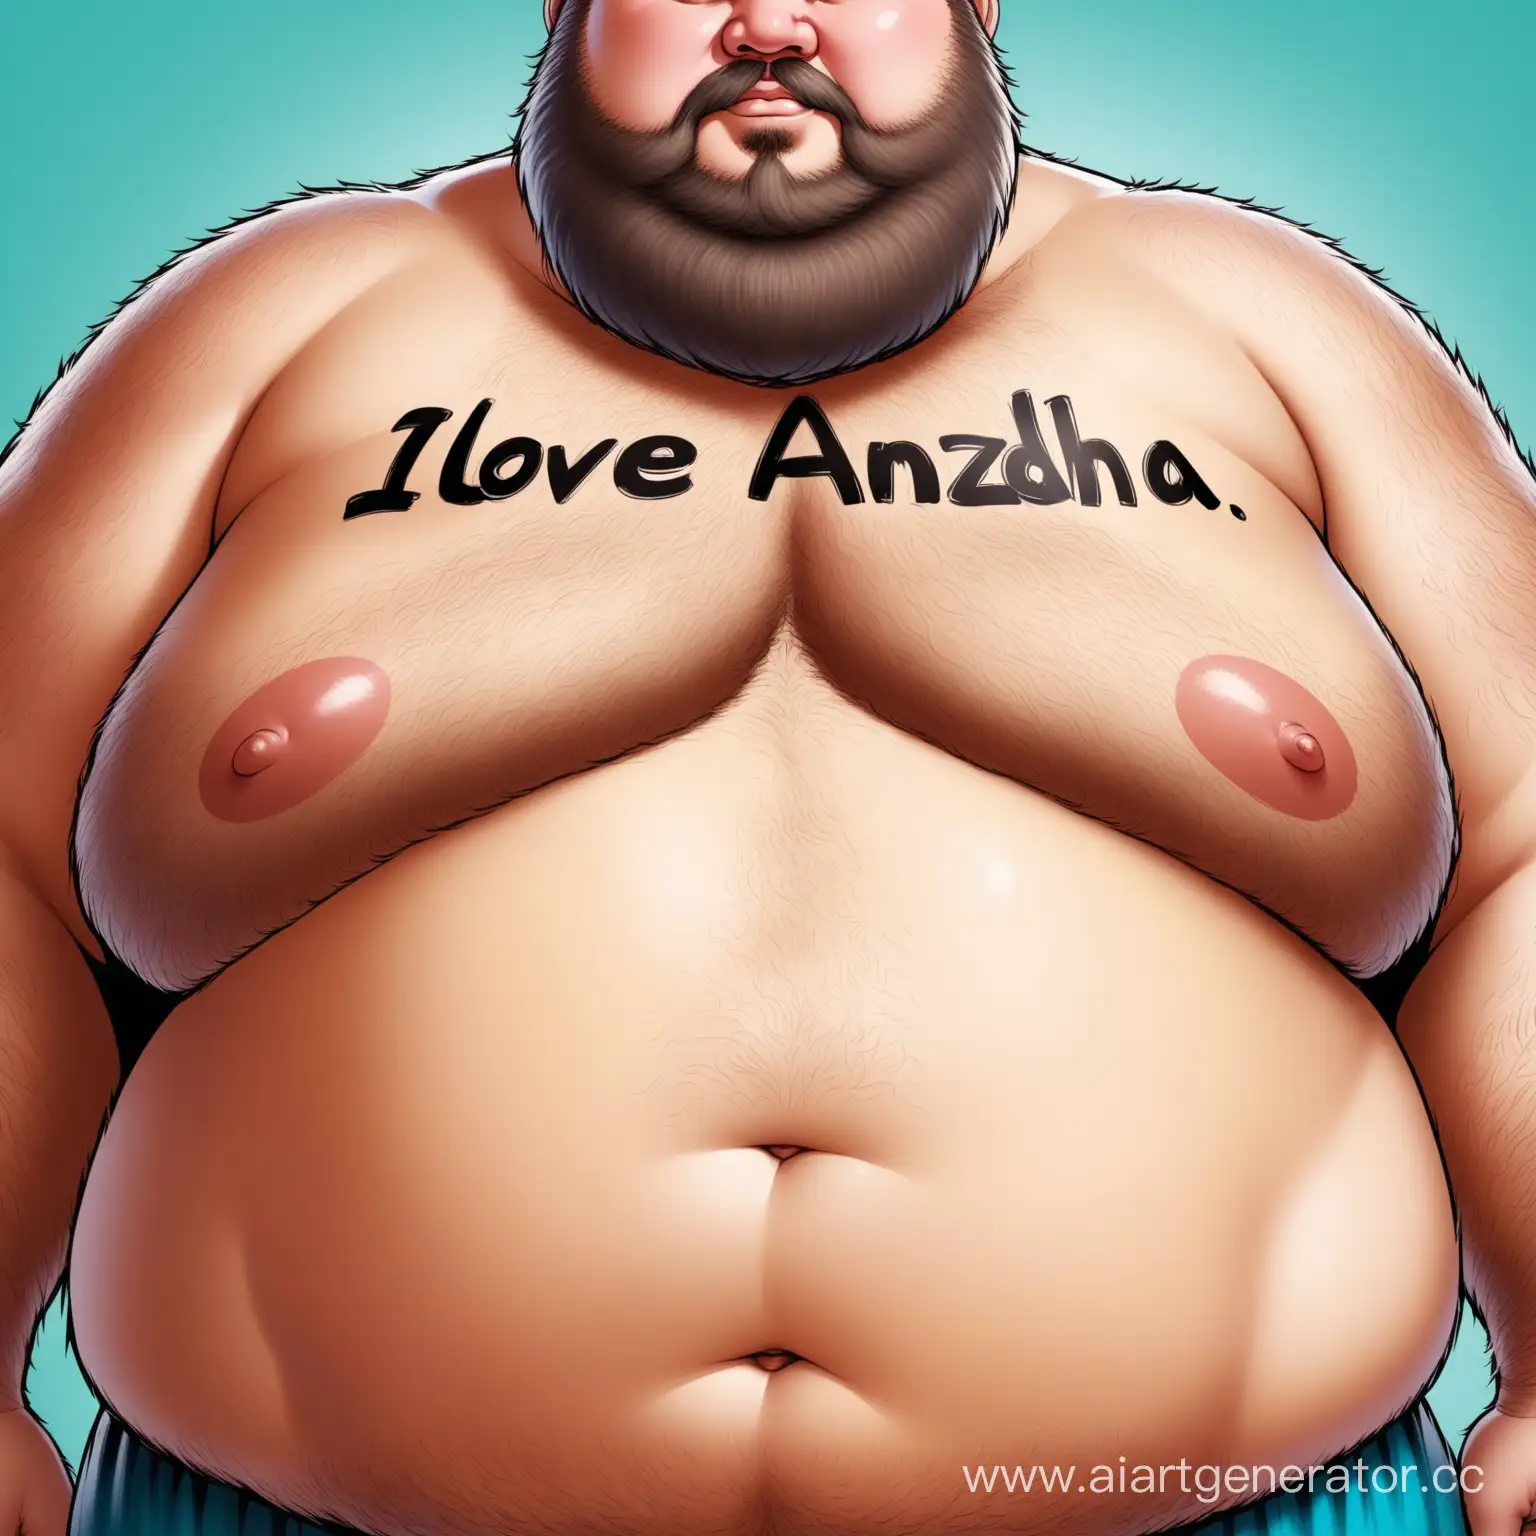 Надпись на животе очень жирного волосатого мужика "I LOVE ANDZHA"